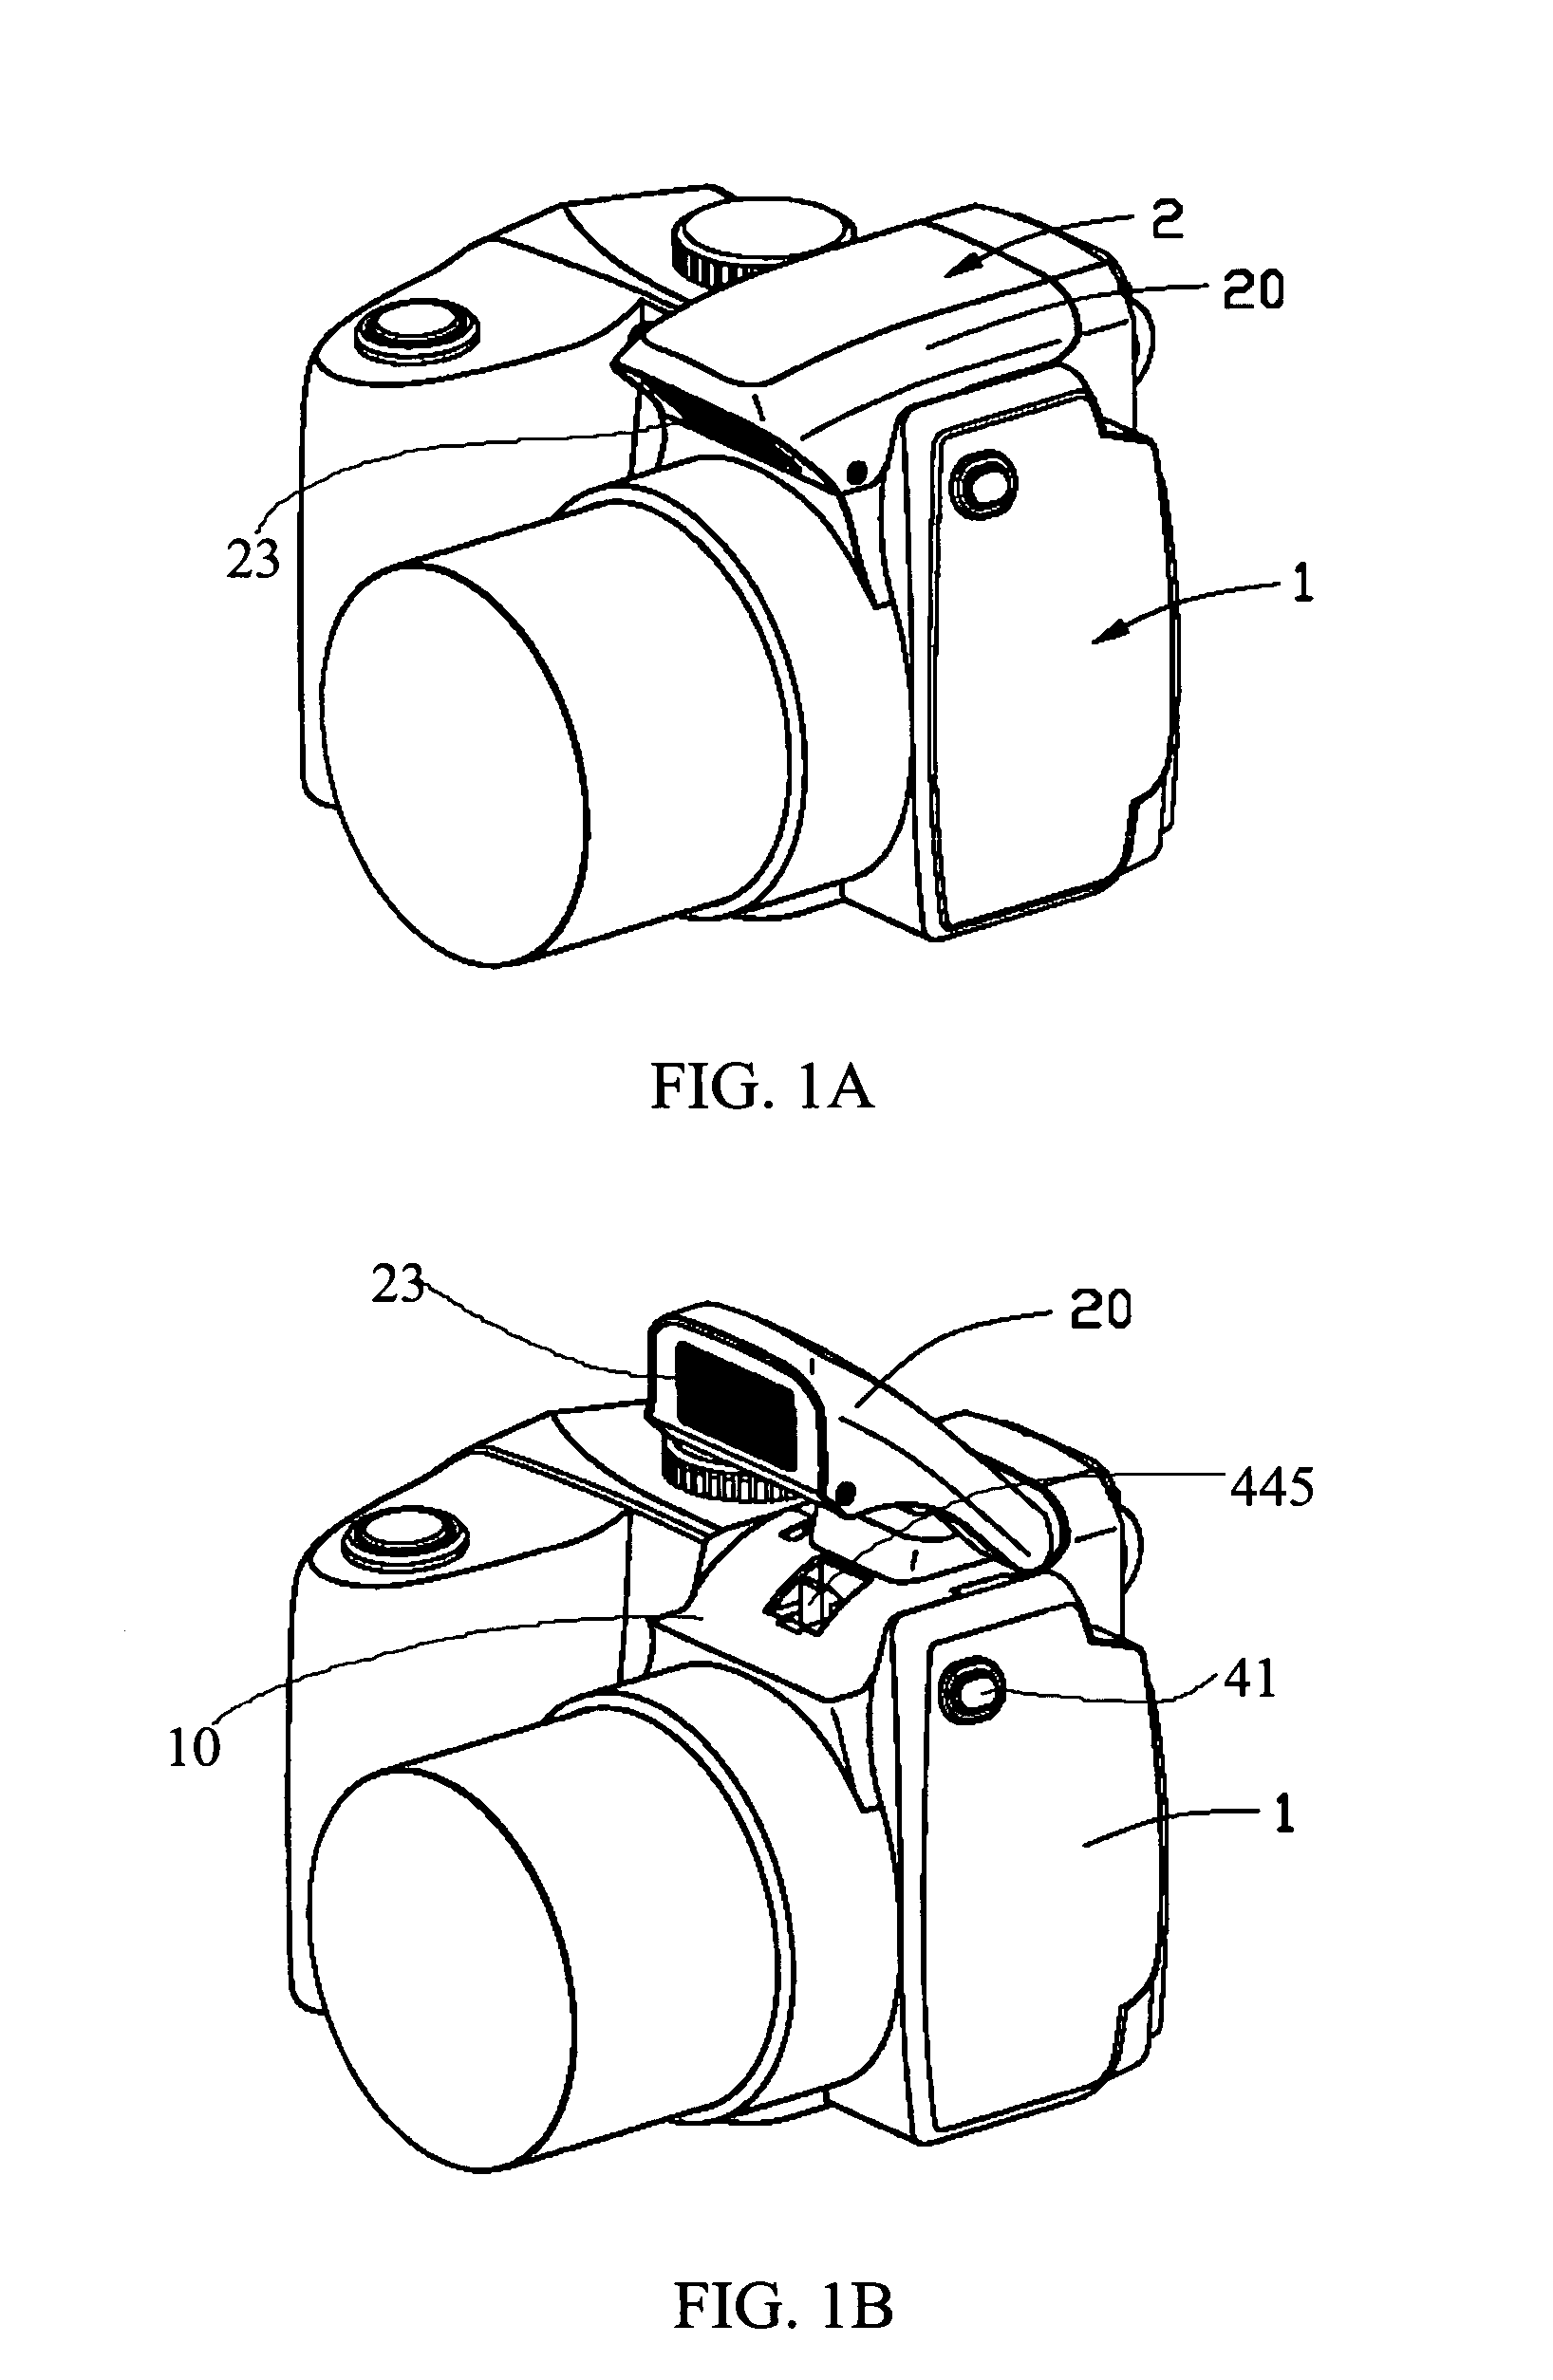 Pop-up flash unit for camera